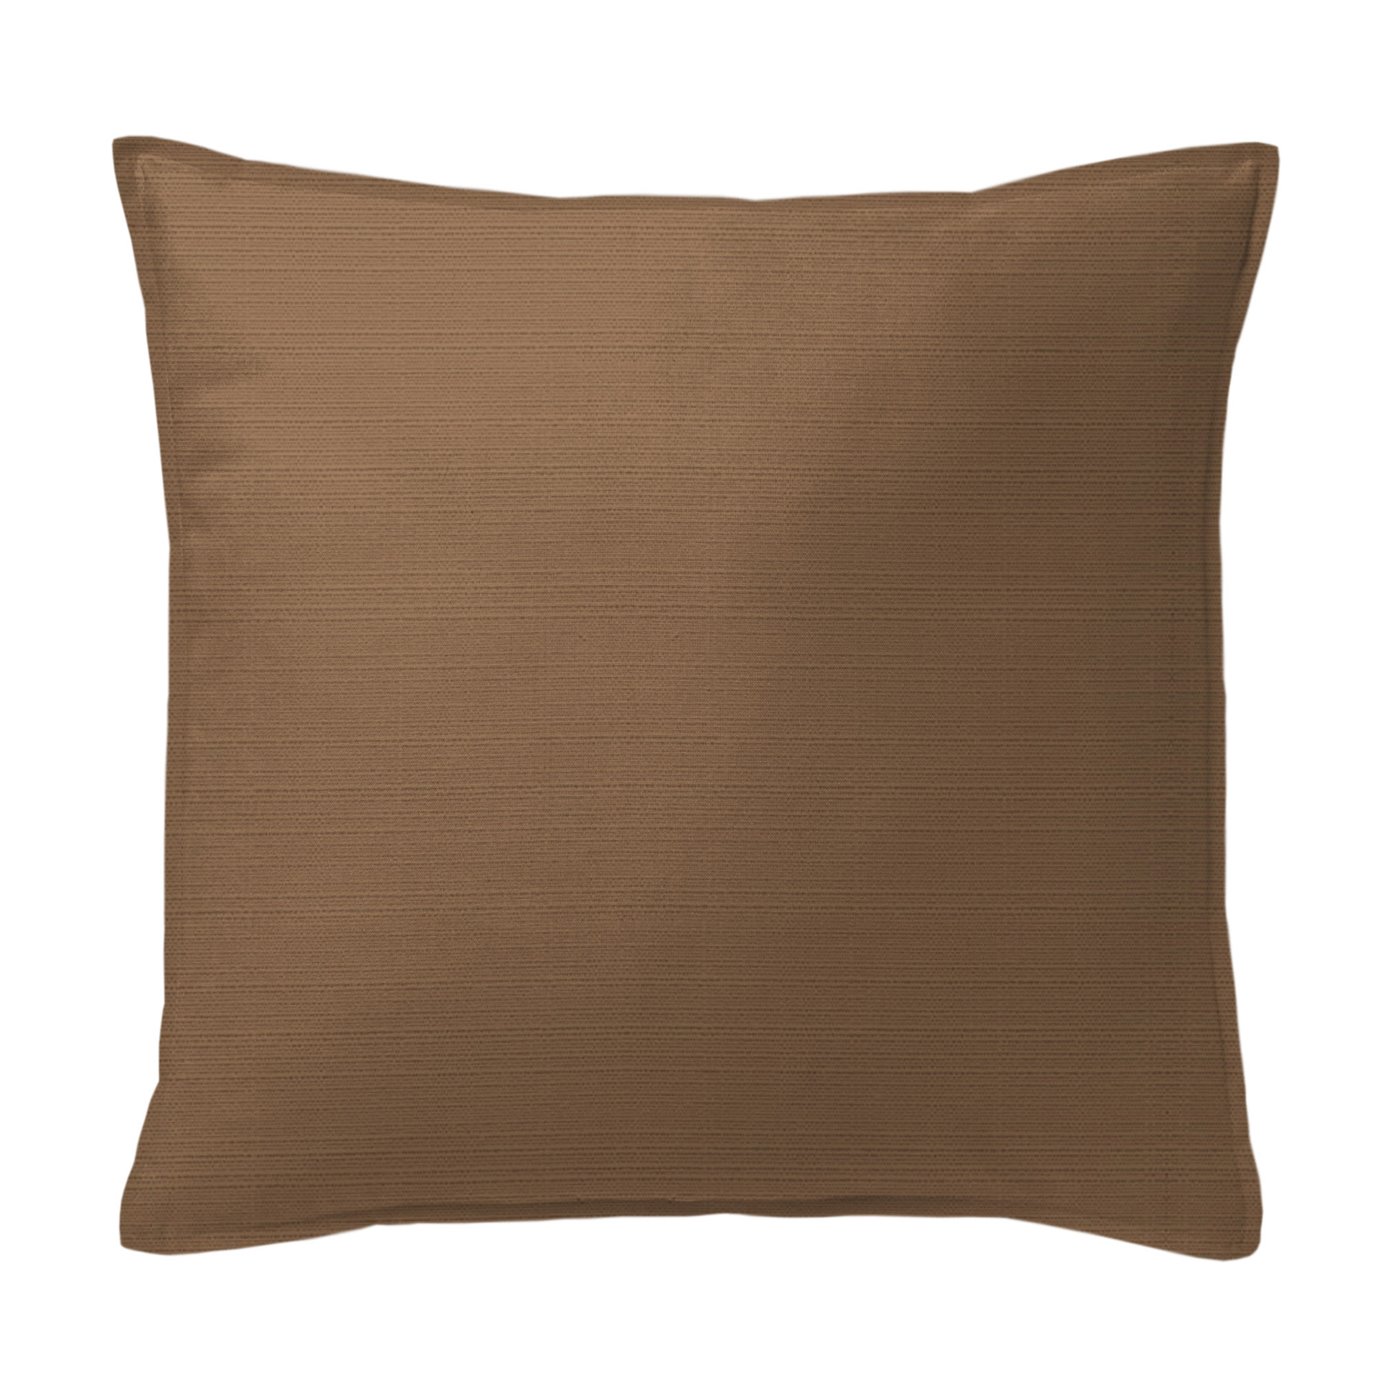 Nova Walnut Decorative Pillow - Size 20" Square